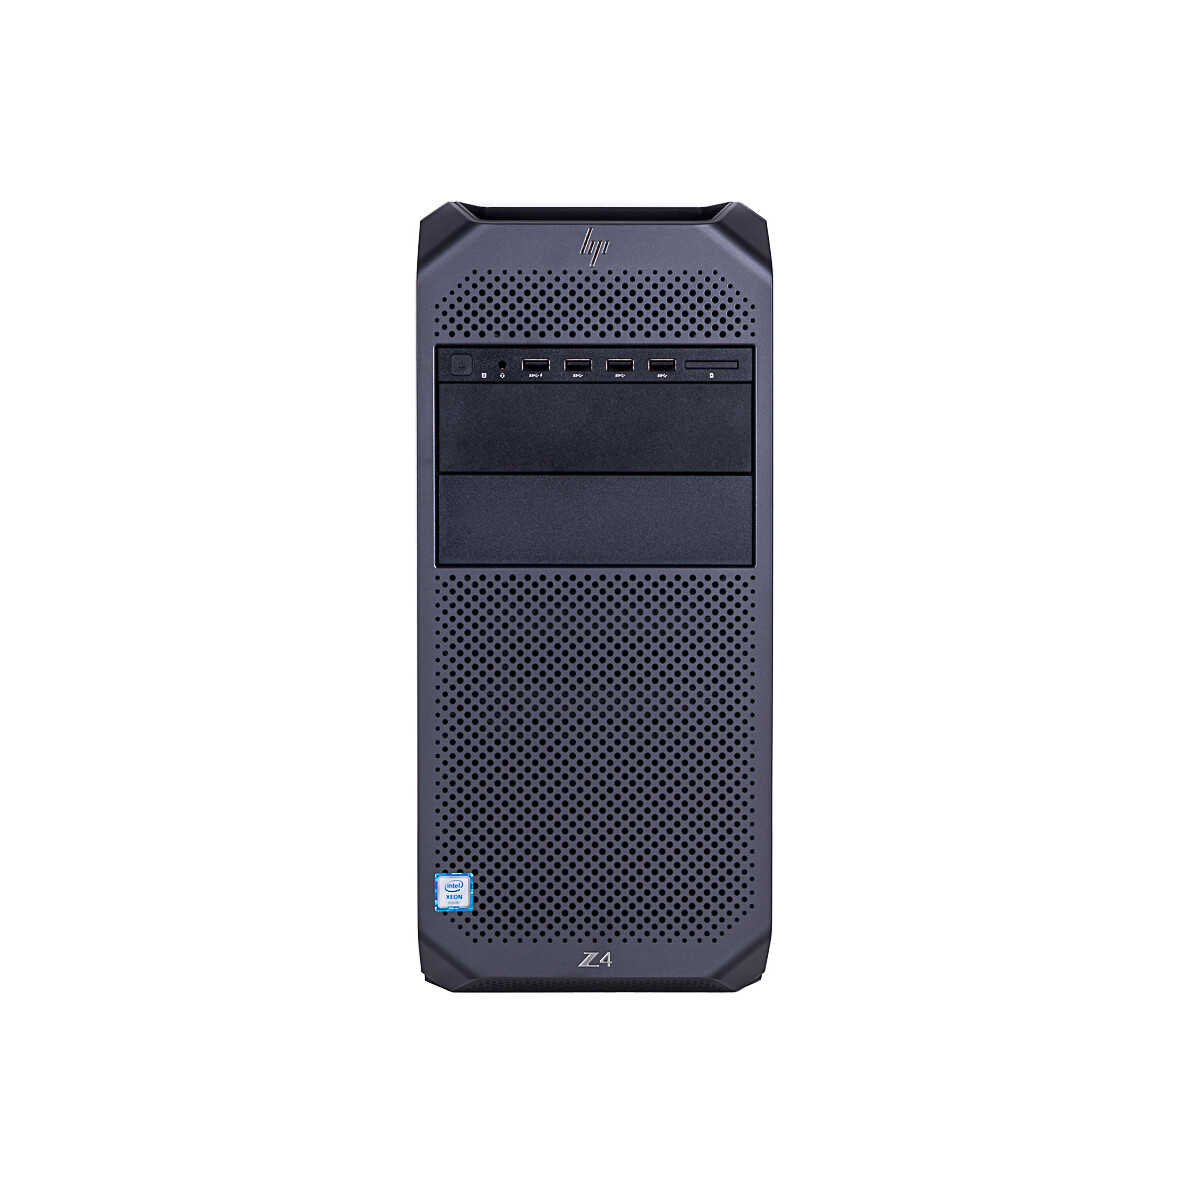 HP Z4 G4 Business Workstation 6-Core Intel i7-7800X, max. 4.00GHz, 32GB DDR4, 500GB M.2 NVMe SSD (NEU), 1TB S-ATA, NVIDIA Quadro P2000 (5GB), WIN 10 Pro 